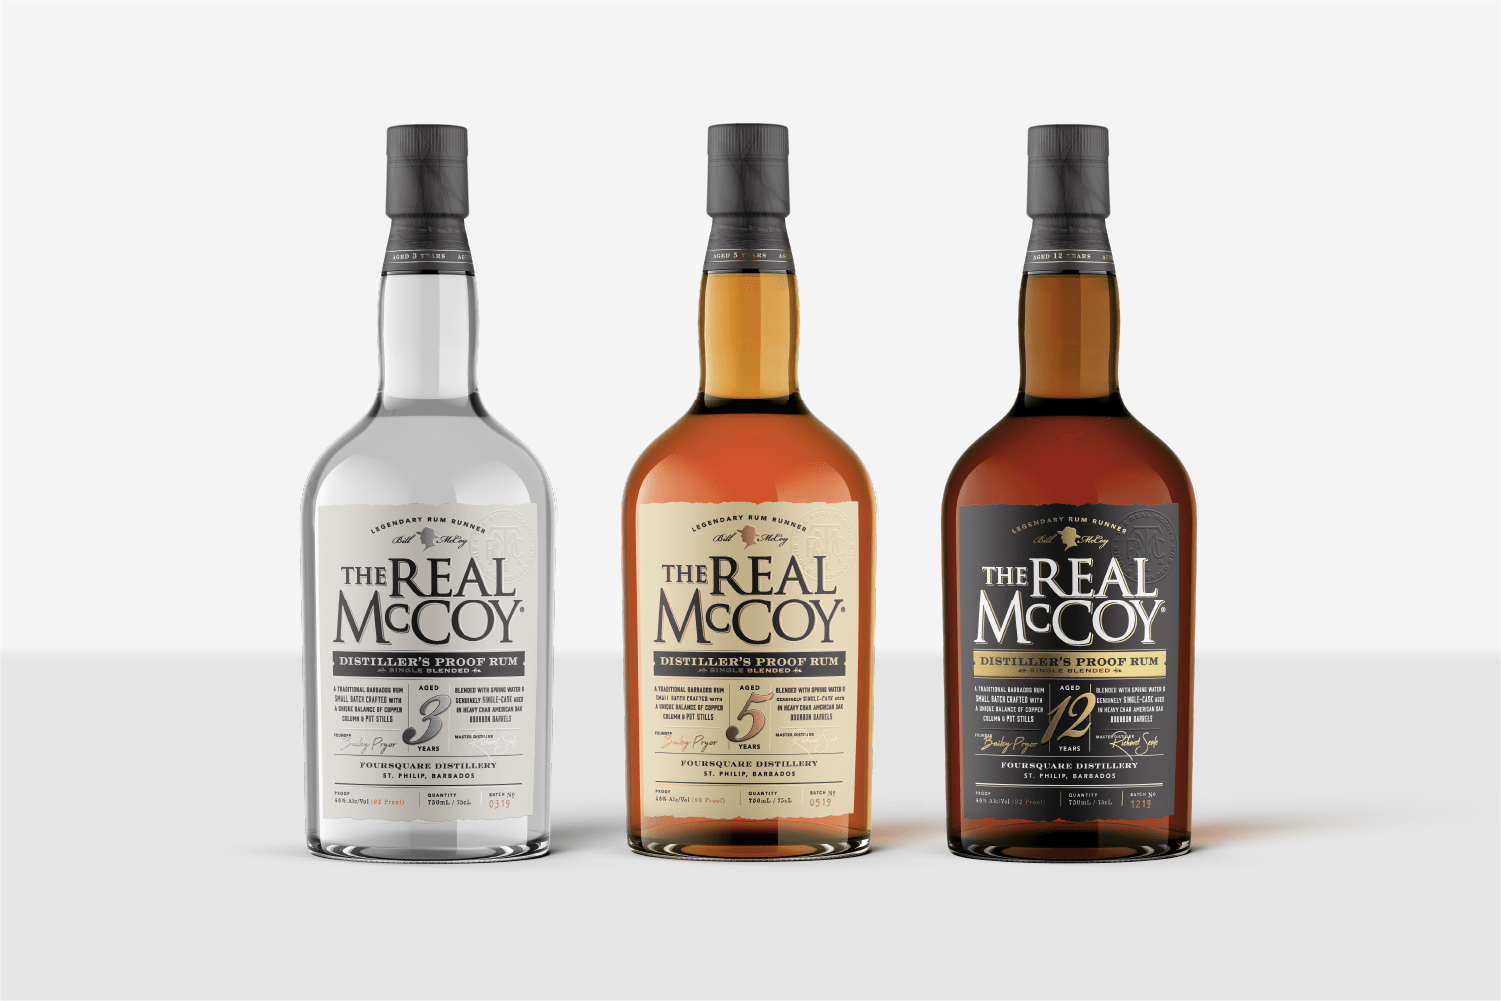 The Real McCoy Single Blended Distiller's Proof Rum, aged 3 years, aged 5 years and aged 12 years.